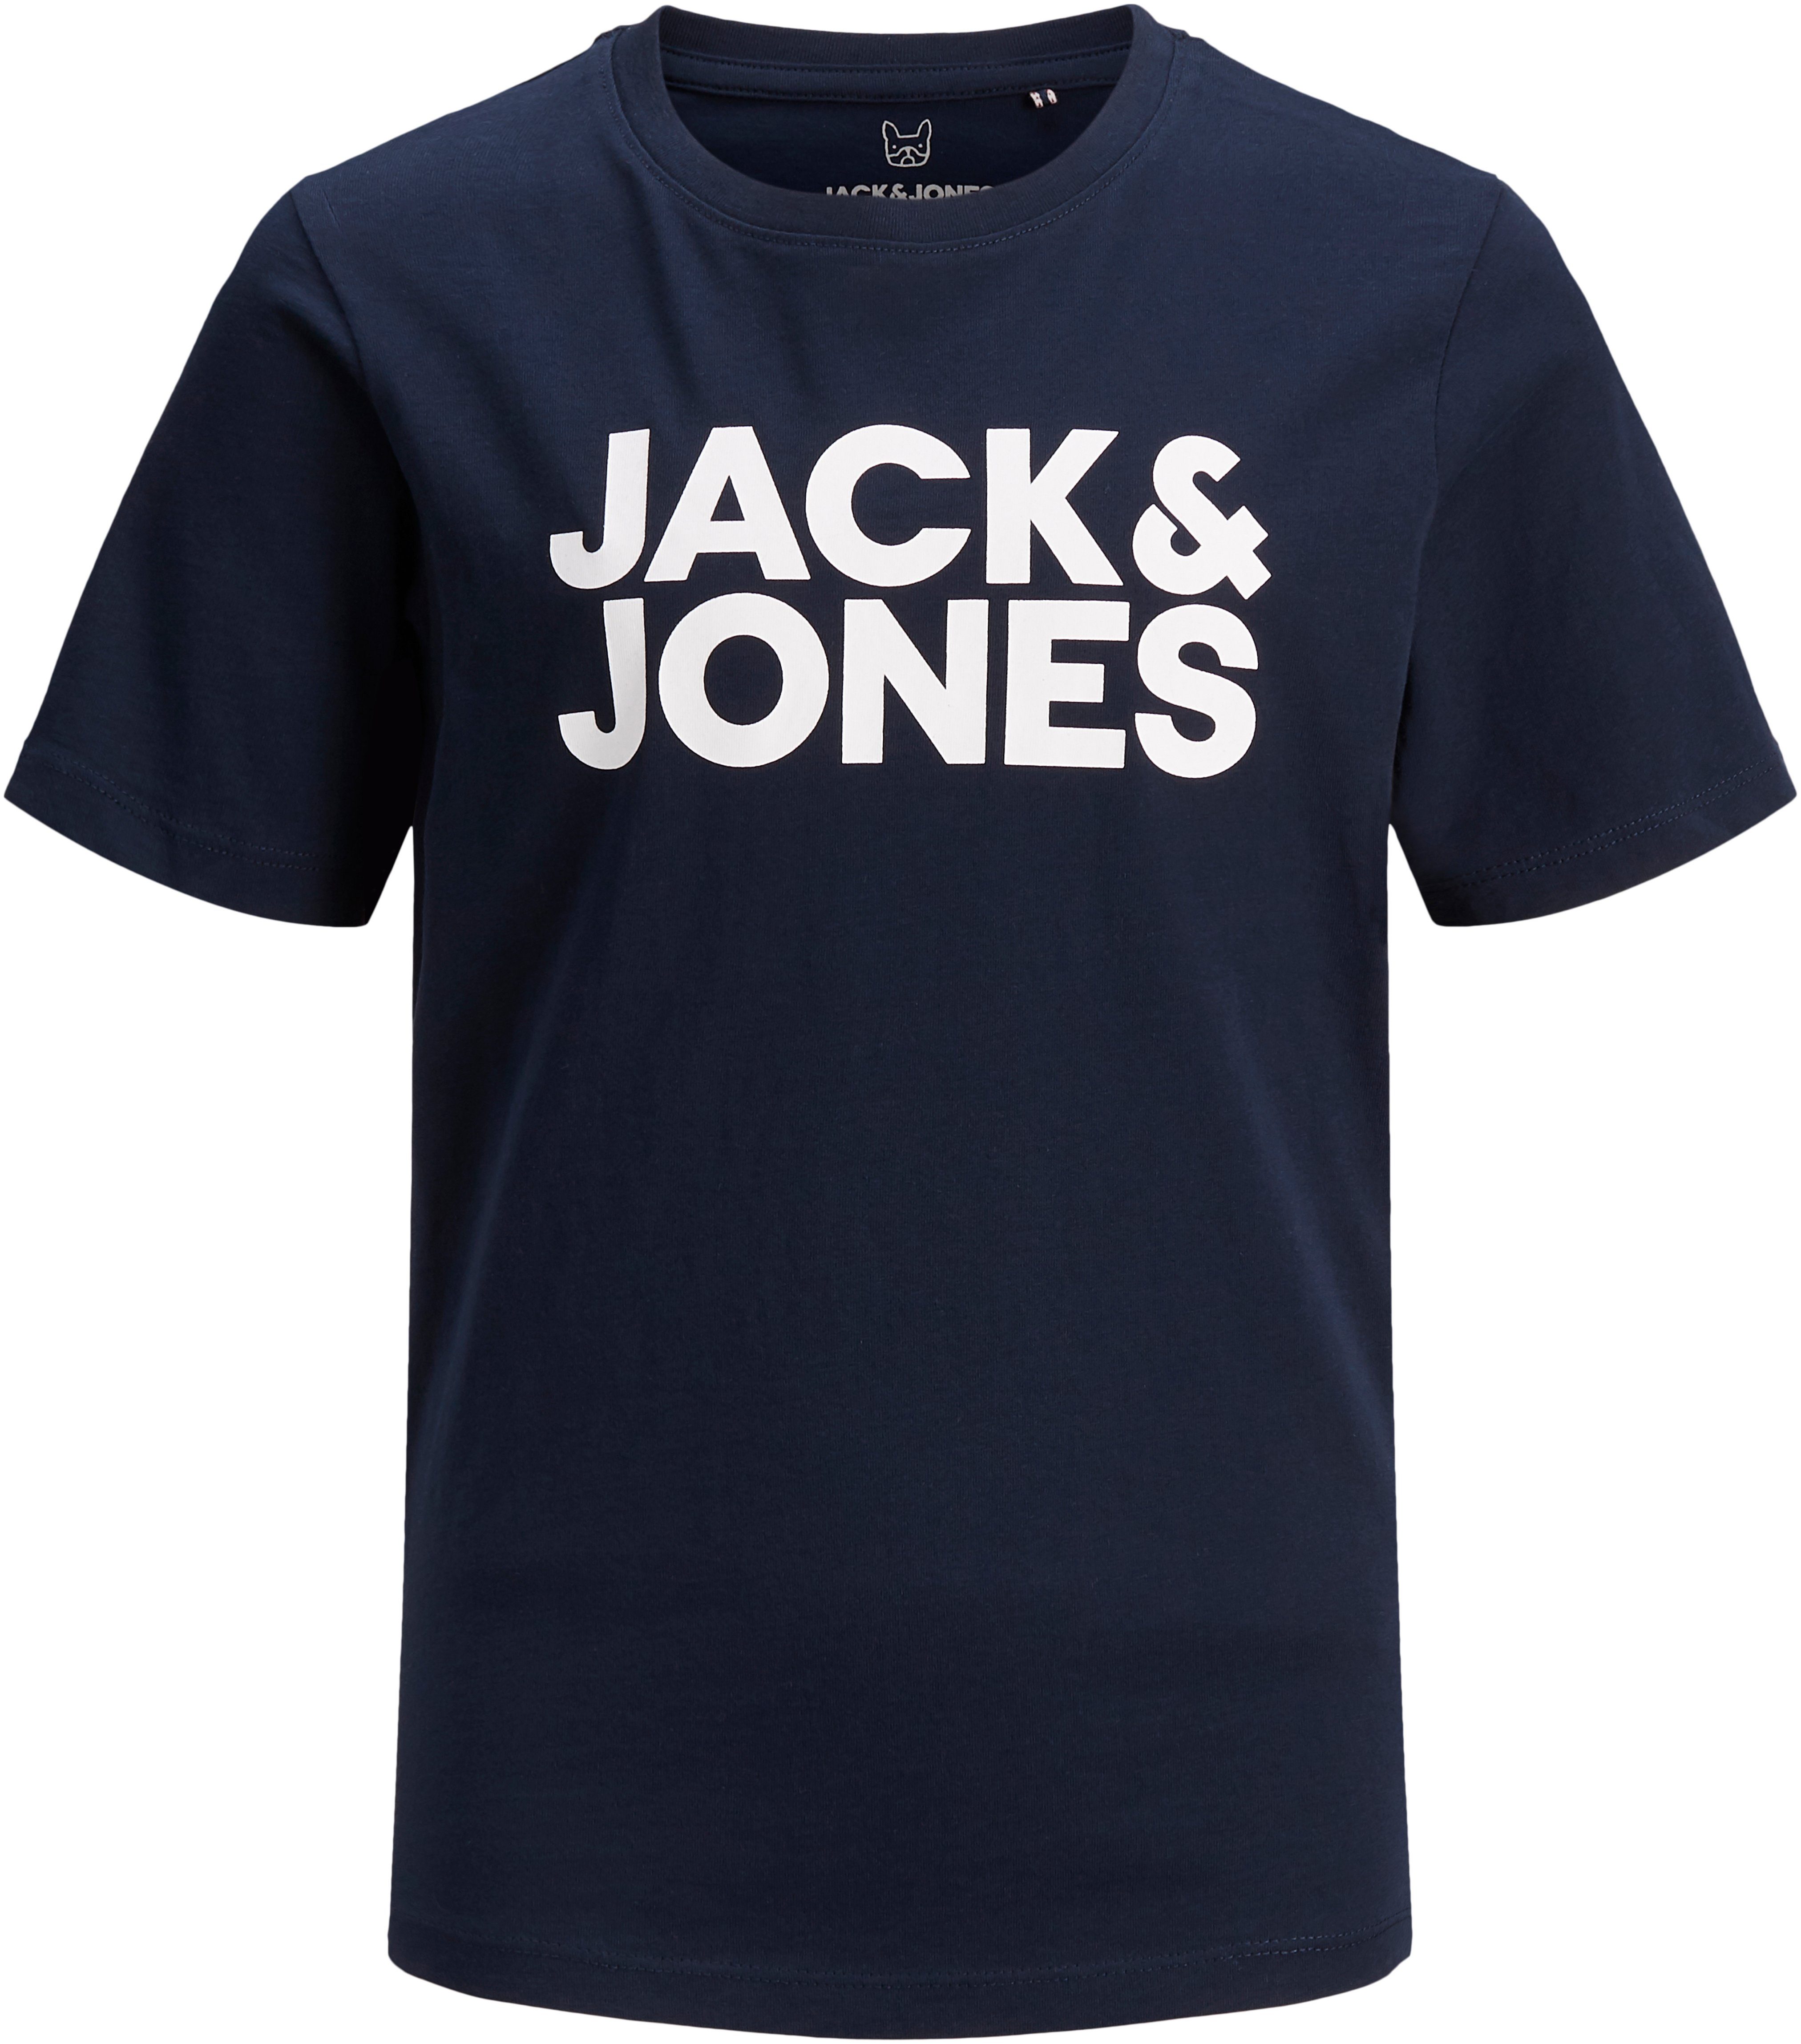 T-Shirt Print navy Jones Jack & Junior blazer/Large